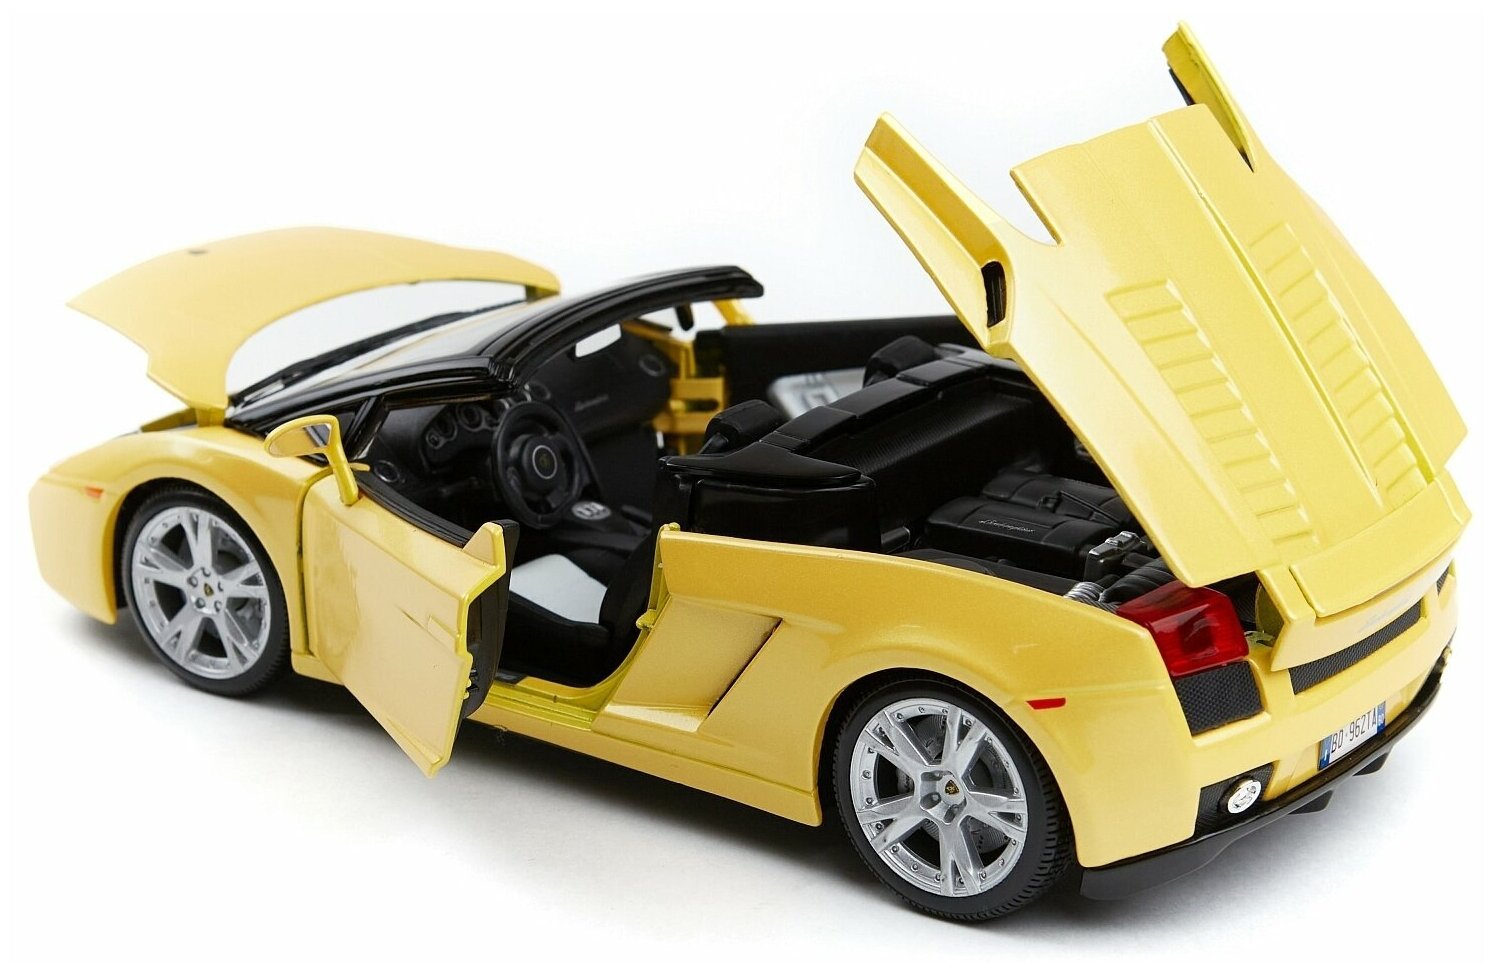 Bburago Коллекционная машинка 1:18 Lamborghini Gallardo Spyder, 18-12016, желтая - фото №5